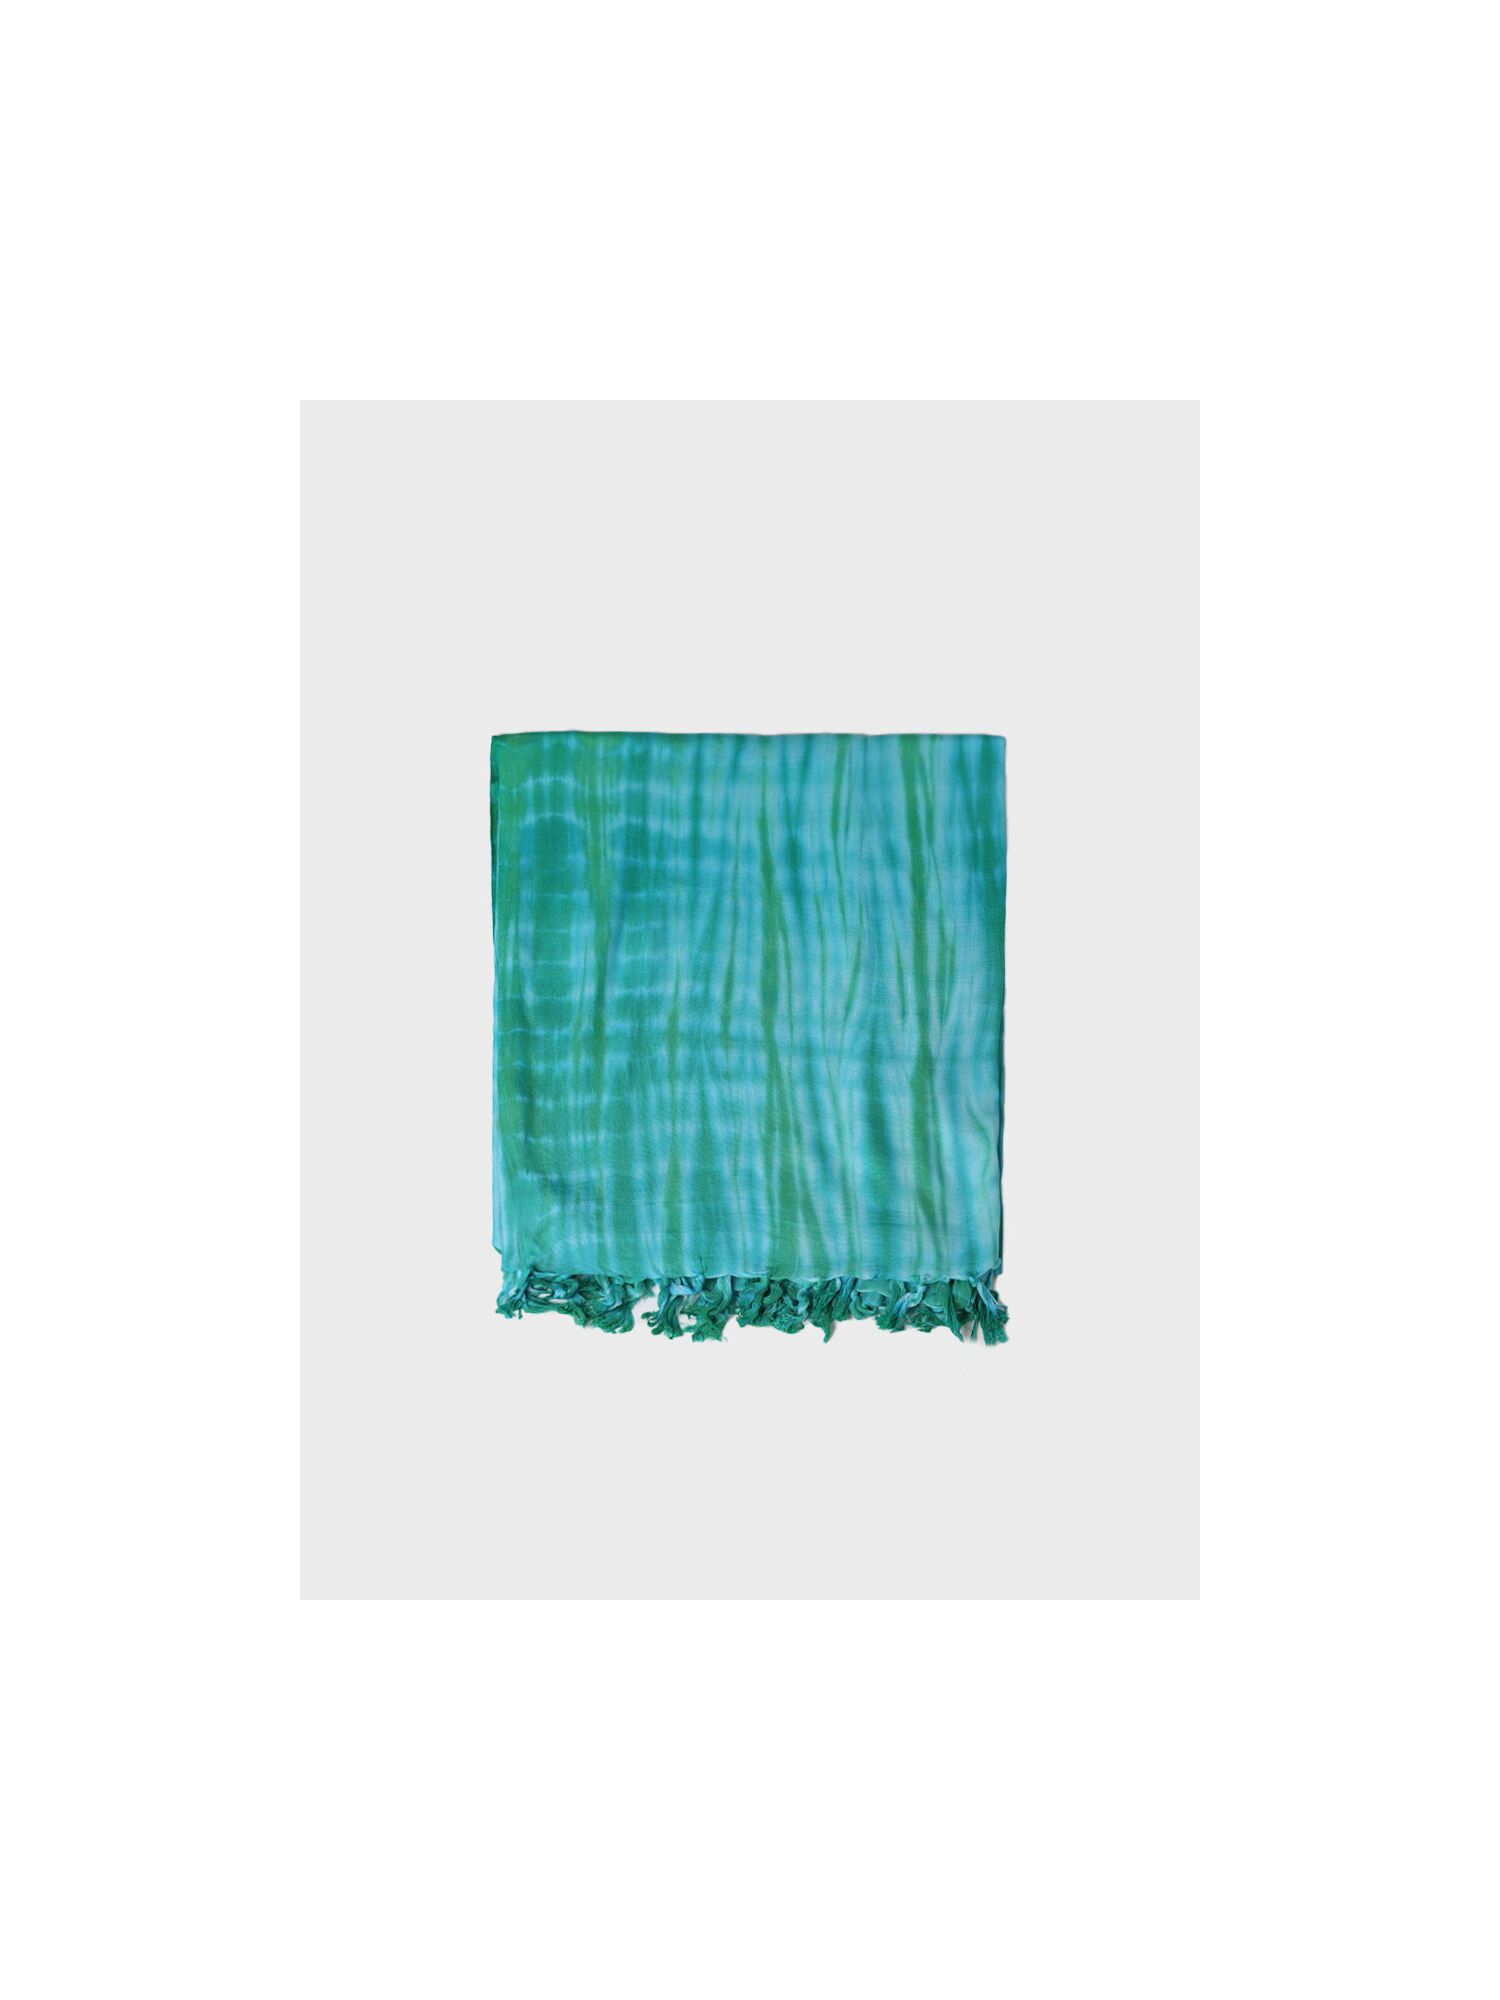 Women's scarf in turquoise colour - FREILA